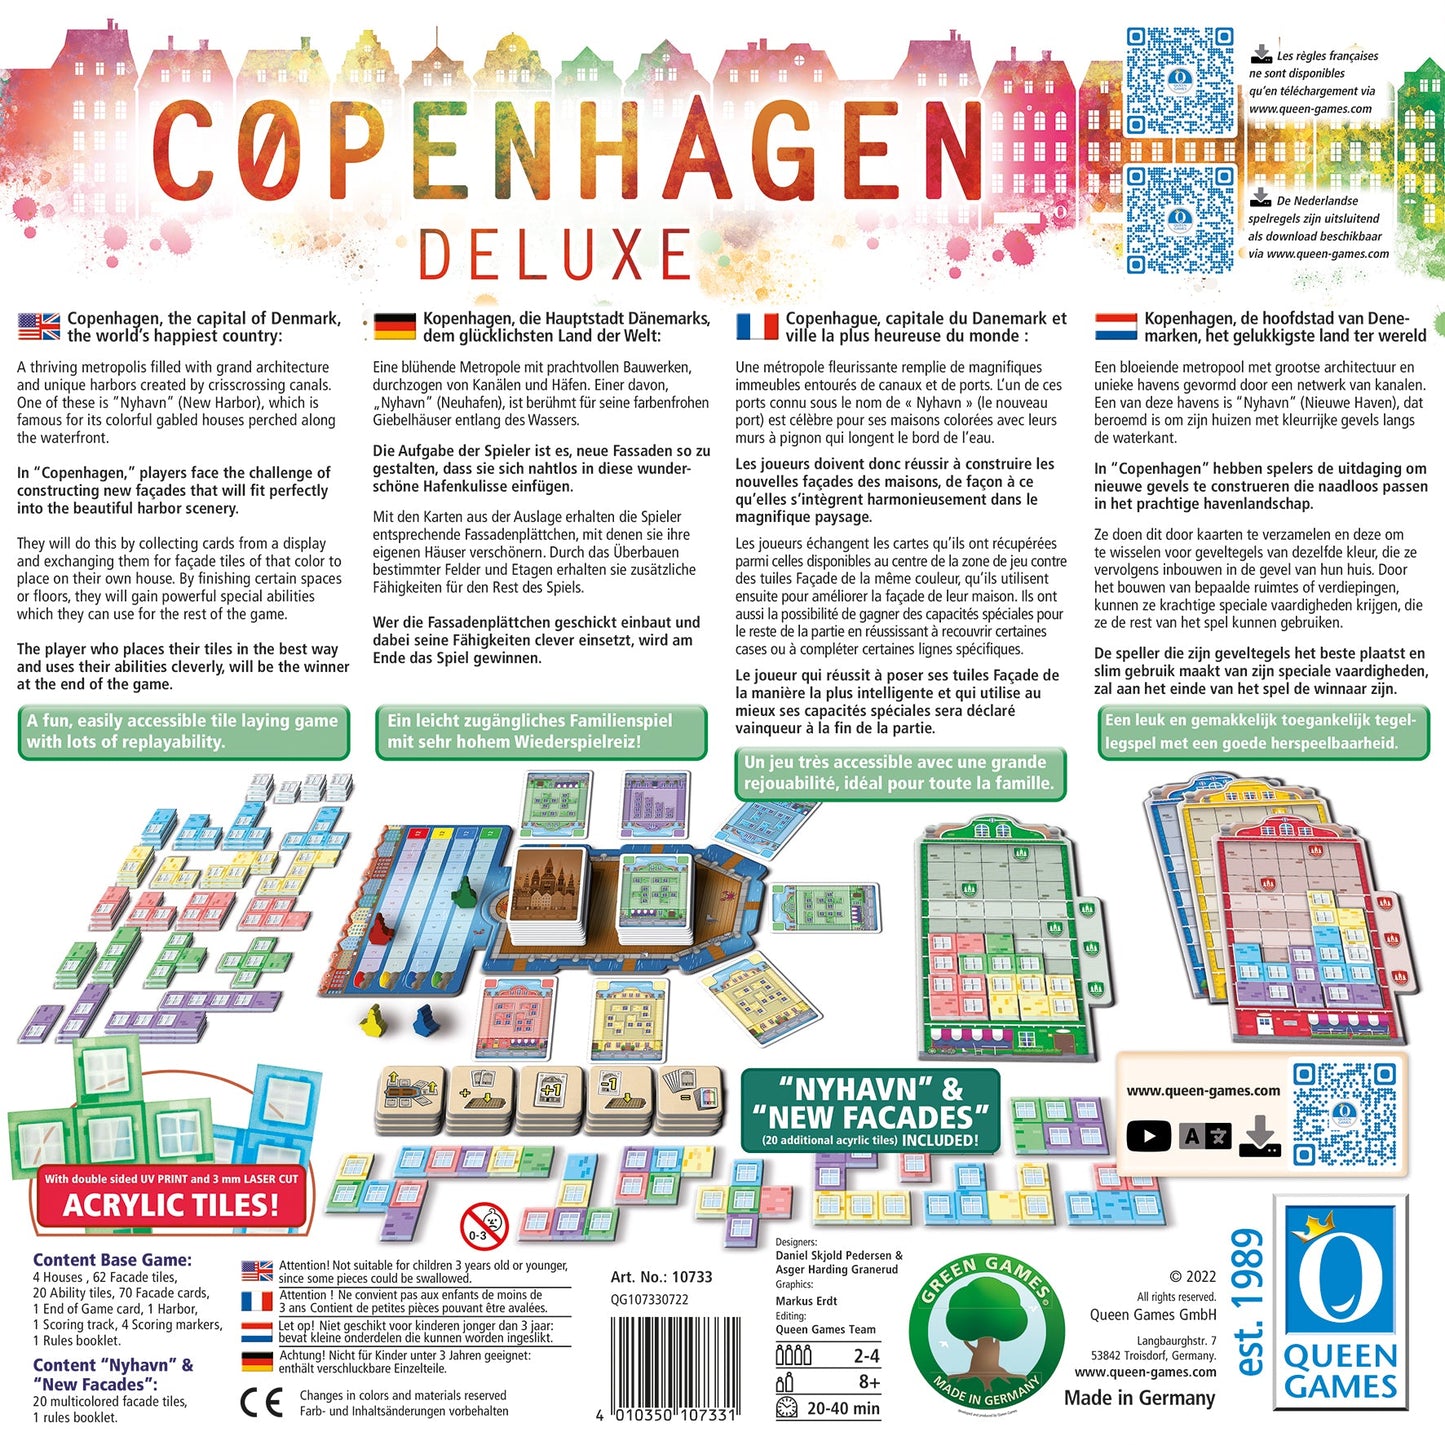 Copenhagen Deluxe Edition Back Cover Text